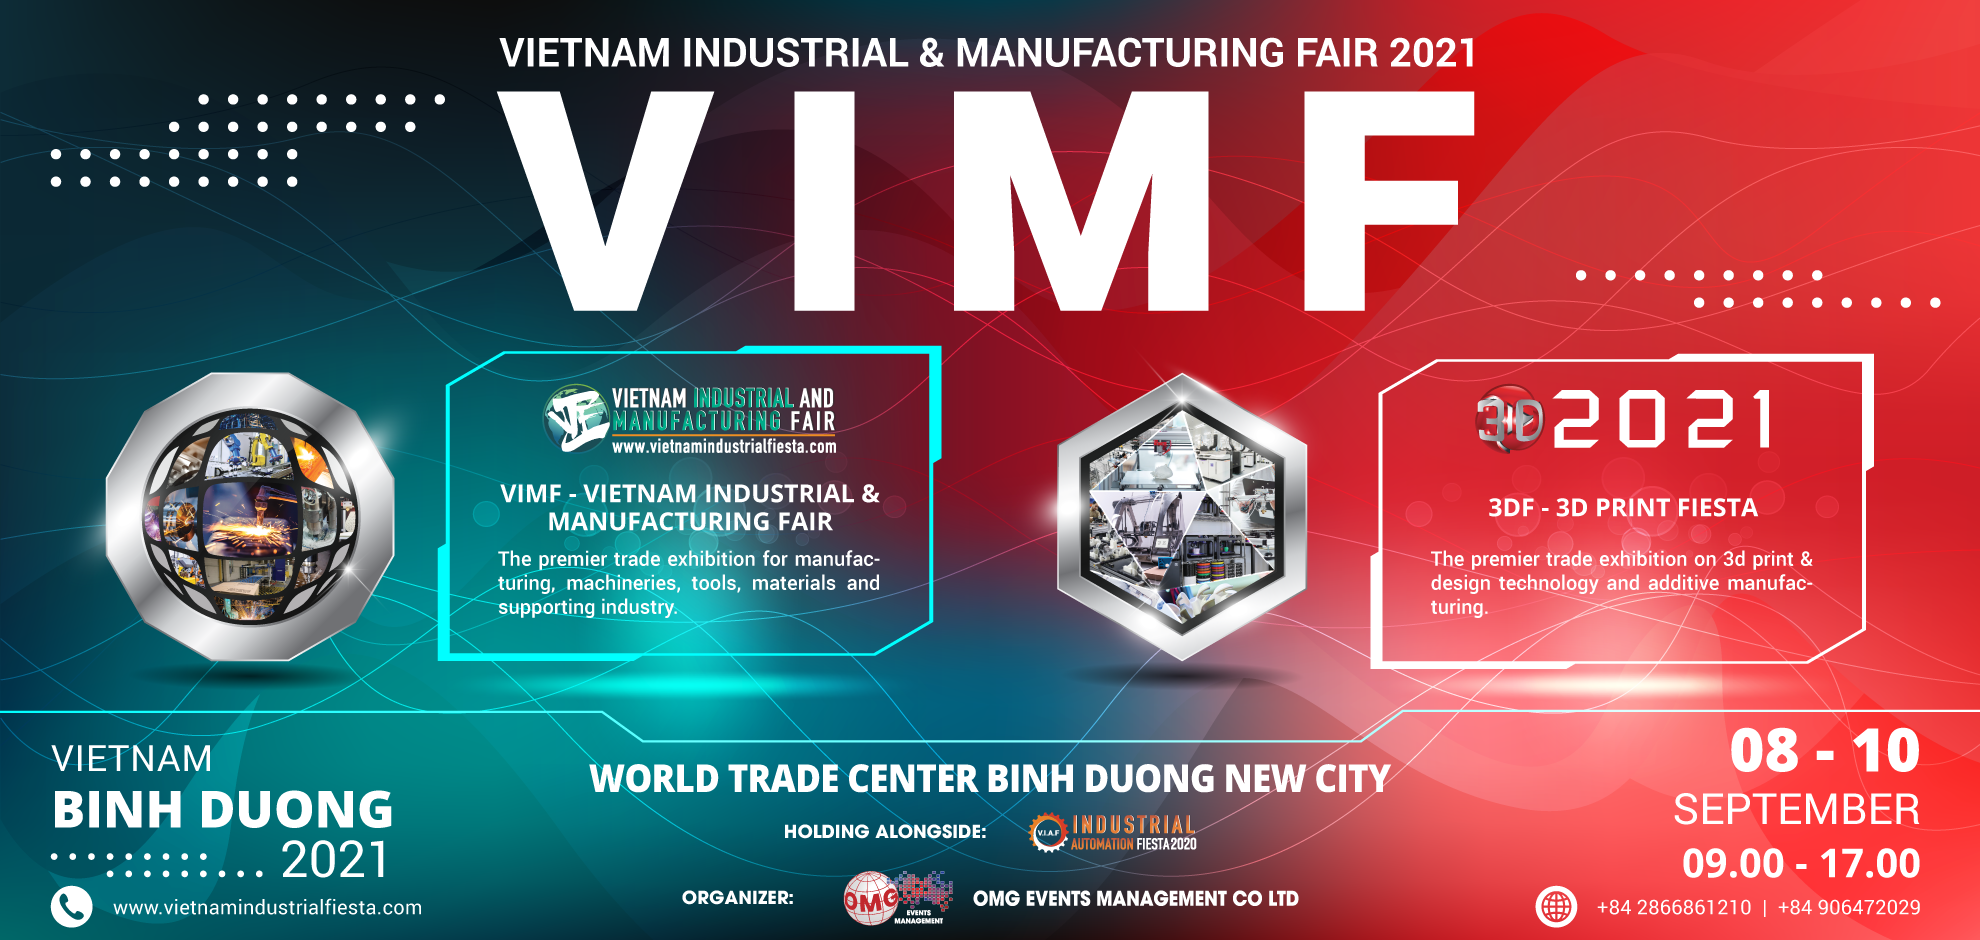 Vietnam Industrial & Manufacturing Fair